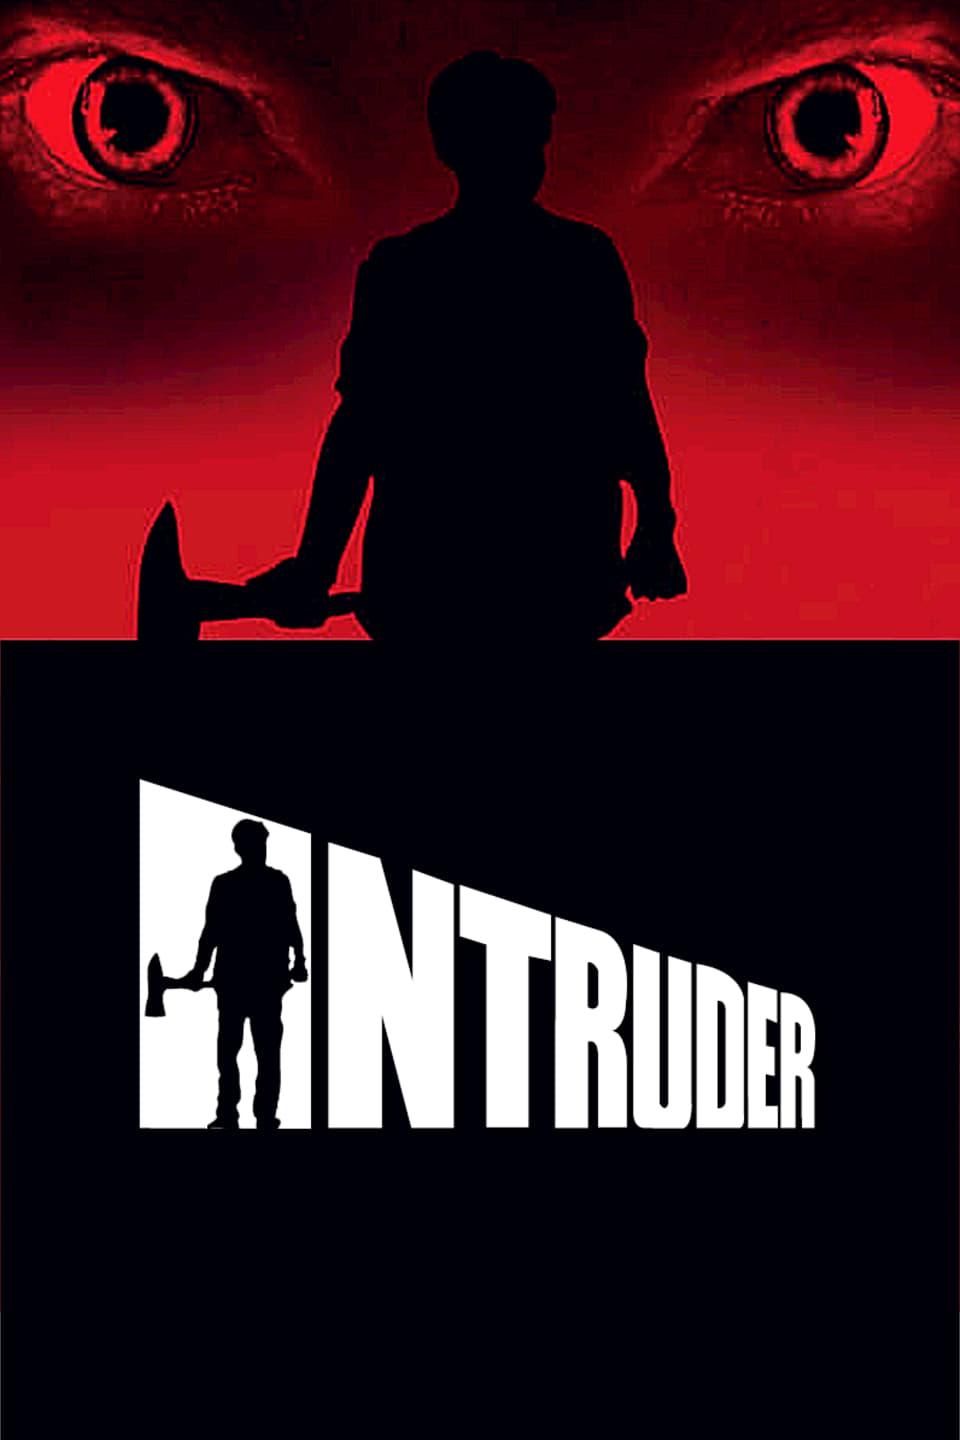 Intruder poster